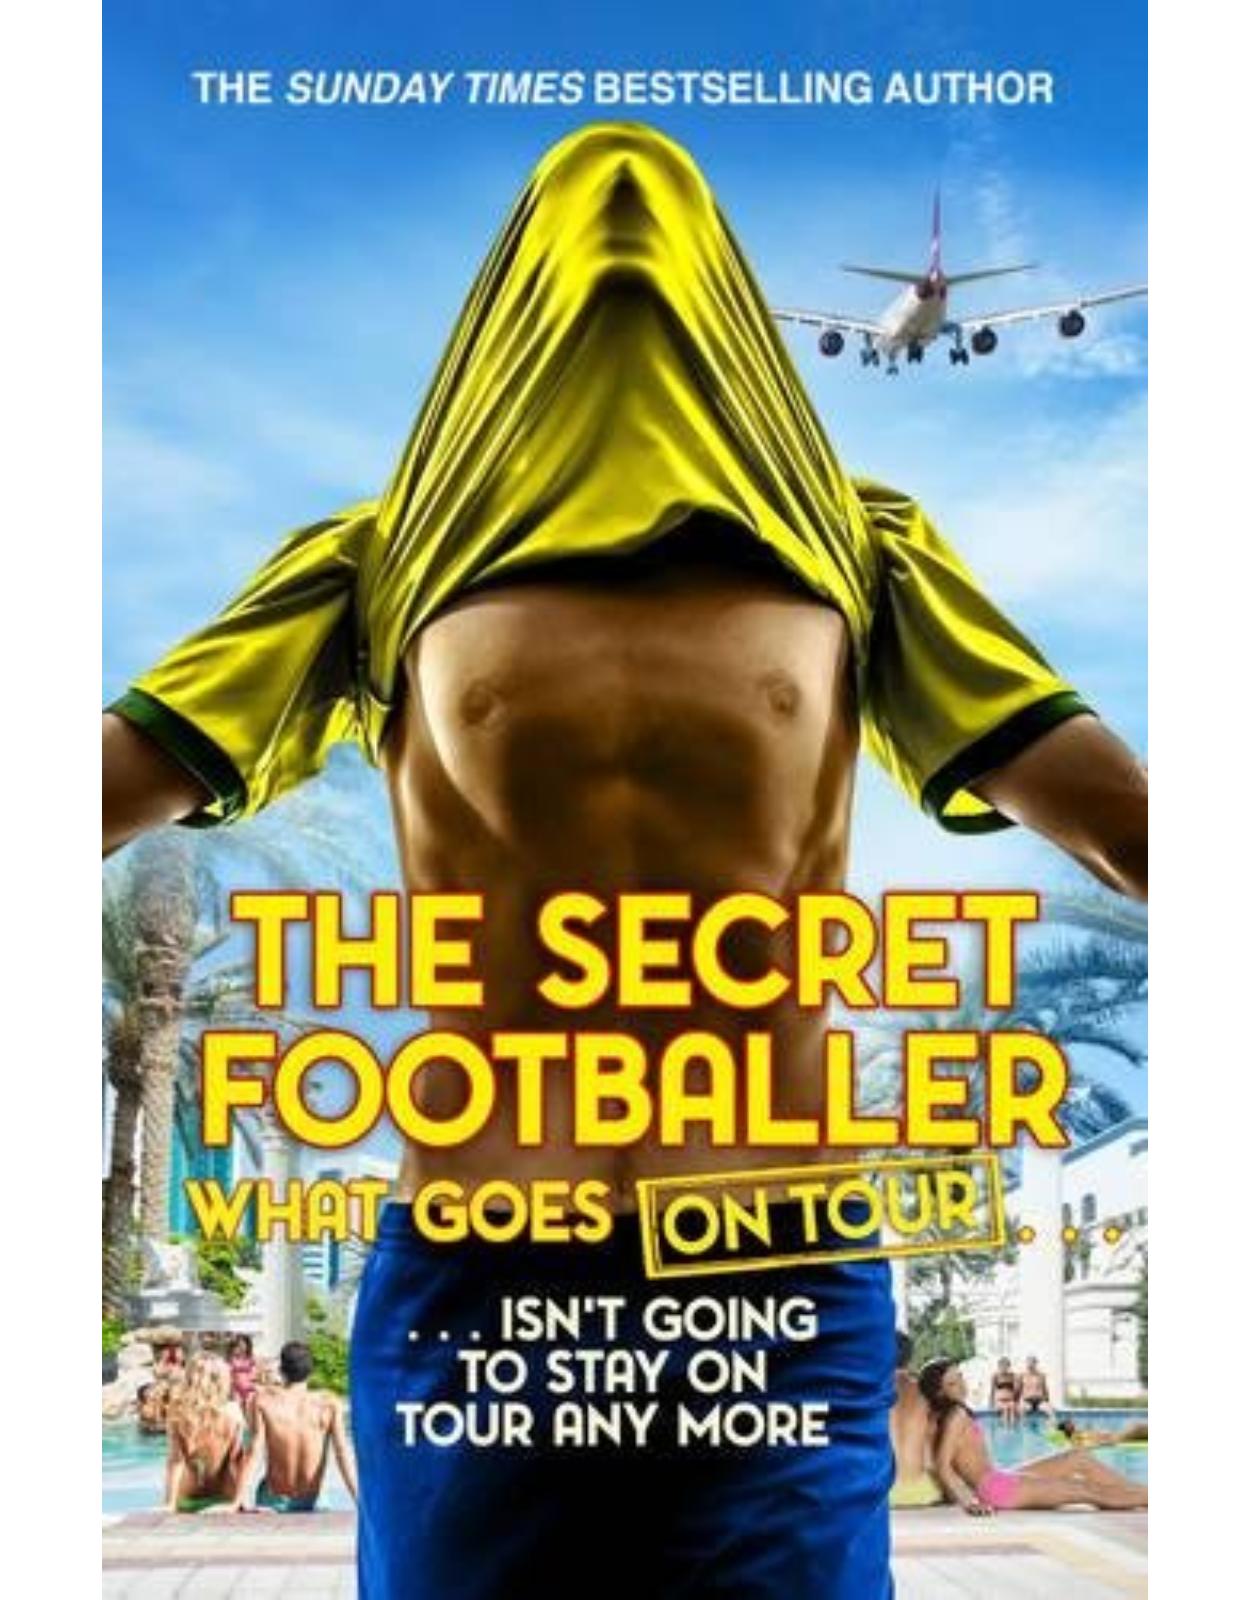 The Secret Footballer: What Goes on Tour